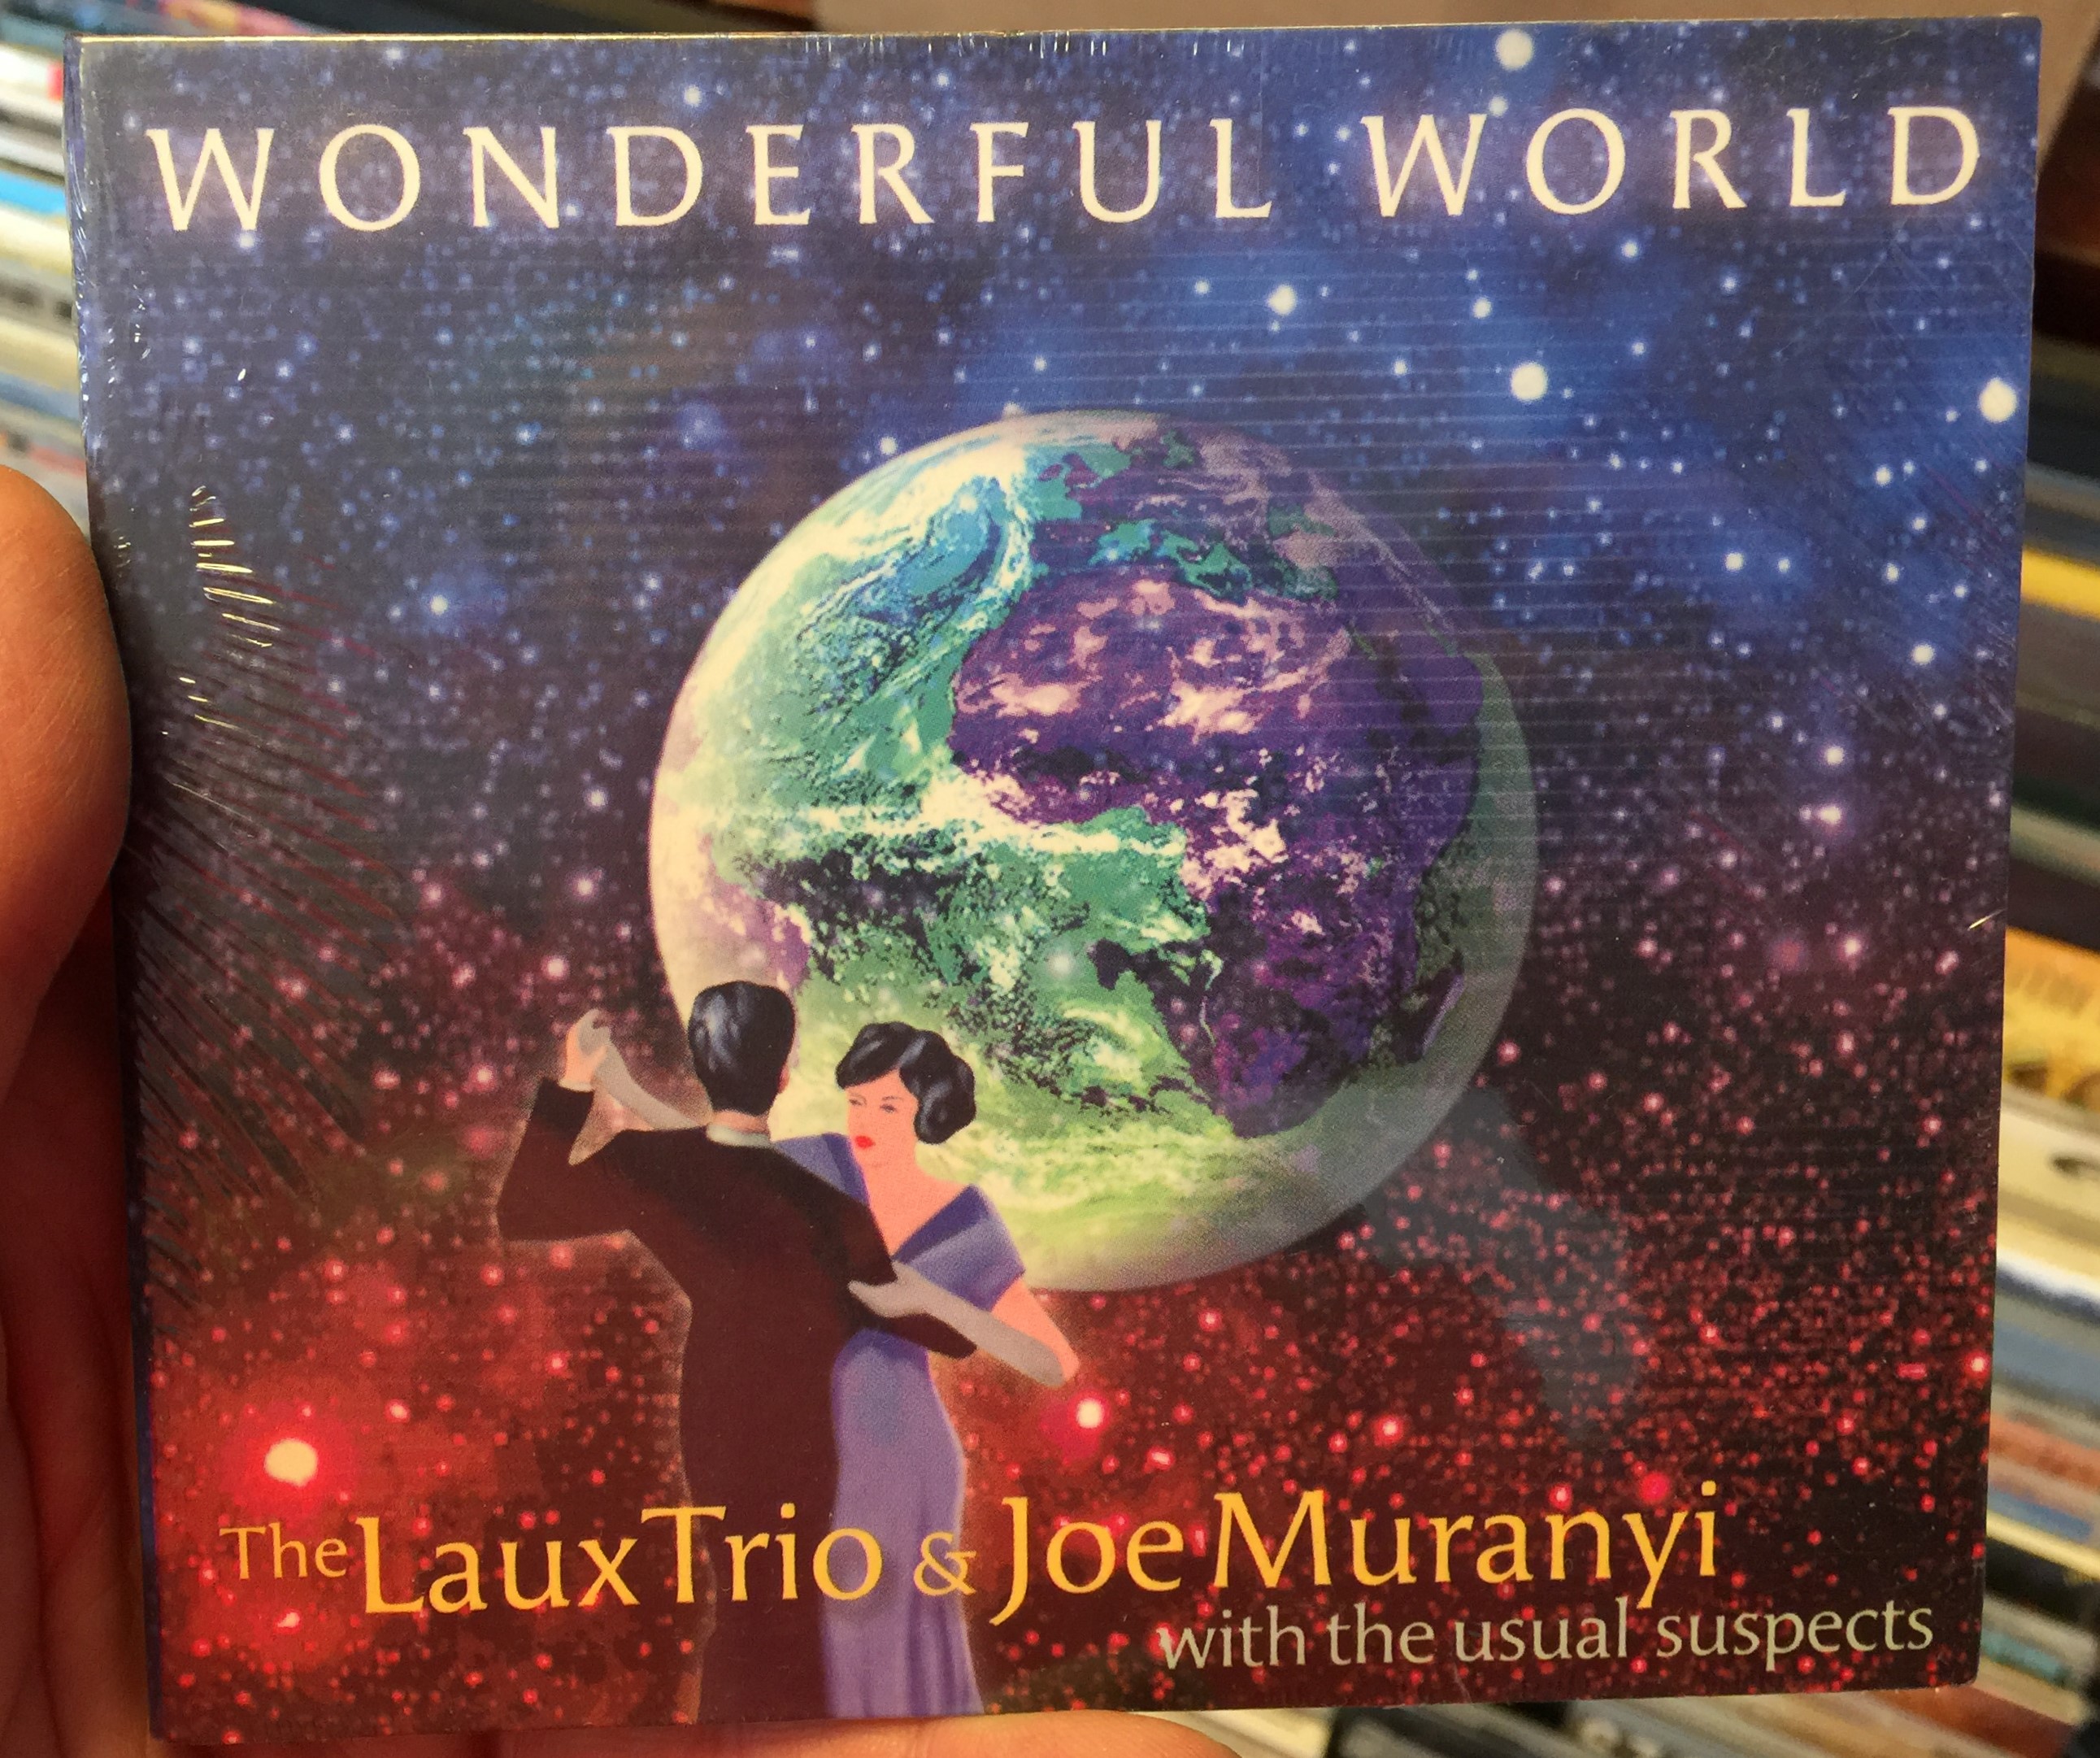 wonderful-world-the-laux-trio-joe-muranyi-with-the-usual-suspects-jokerex-audio-cd-2001-22140207-1-.jpg